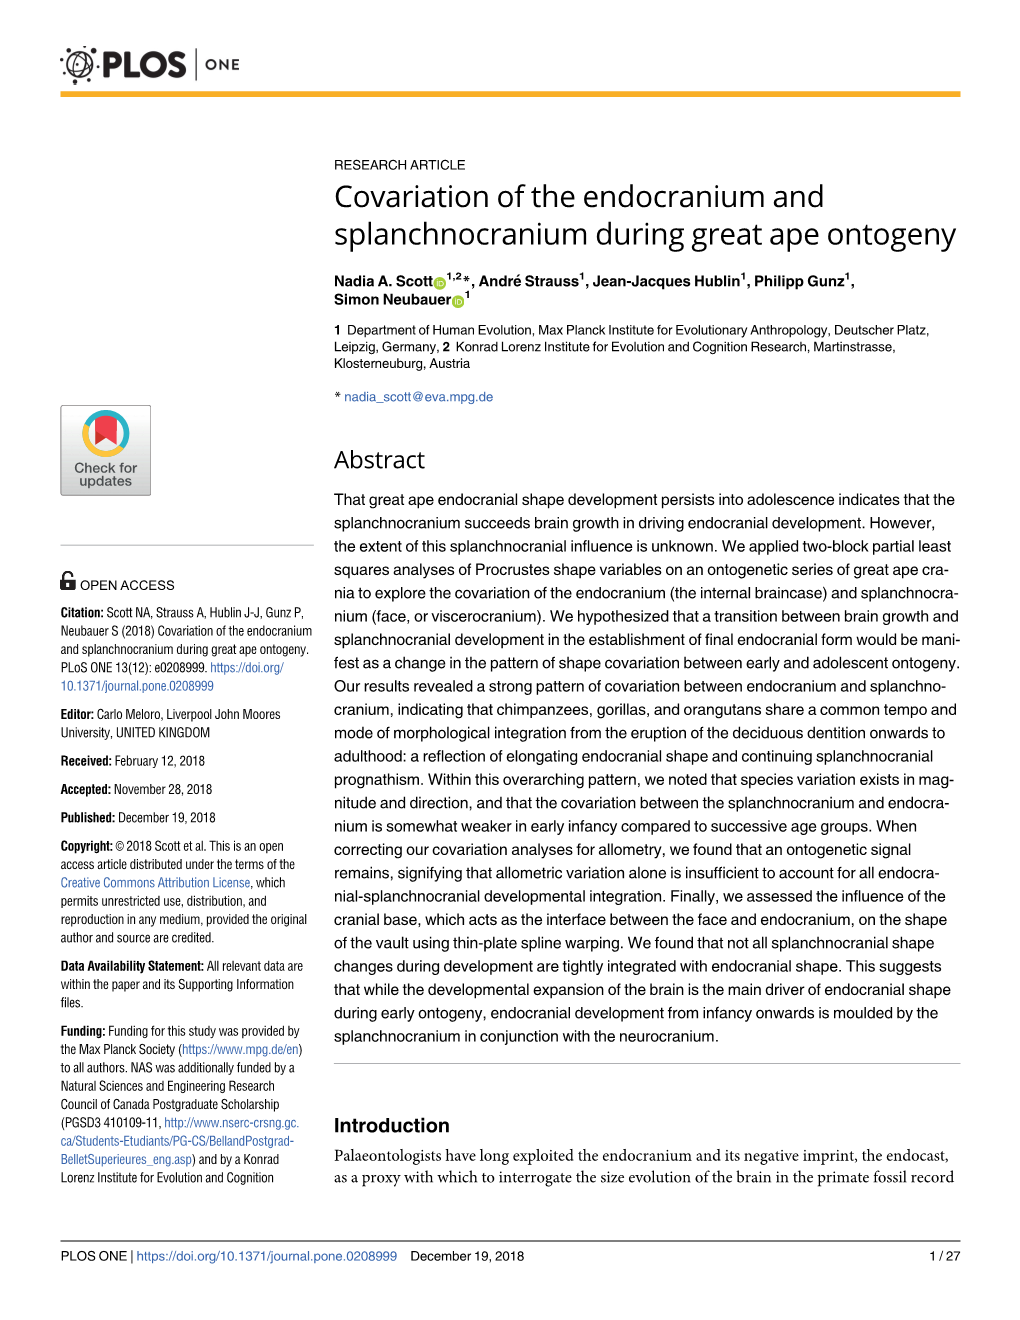 Covariation of the Endocranium and Splanchnocranium During Great Ape Ontogeny